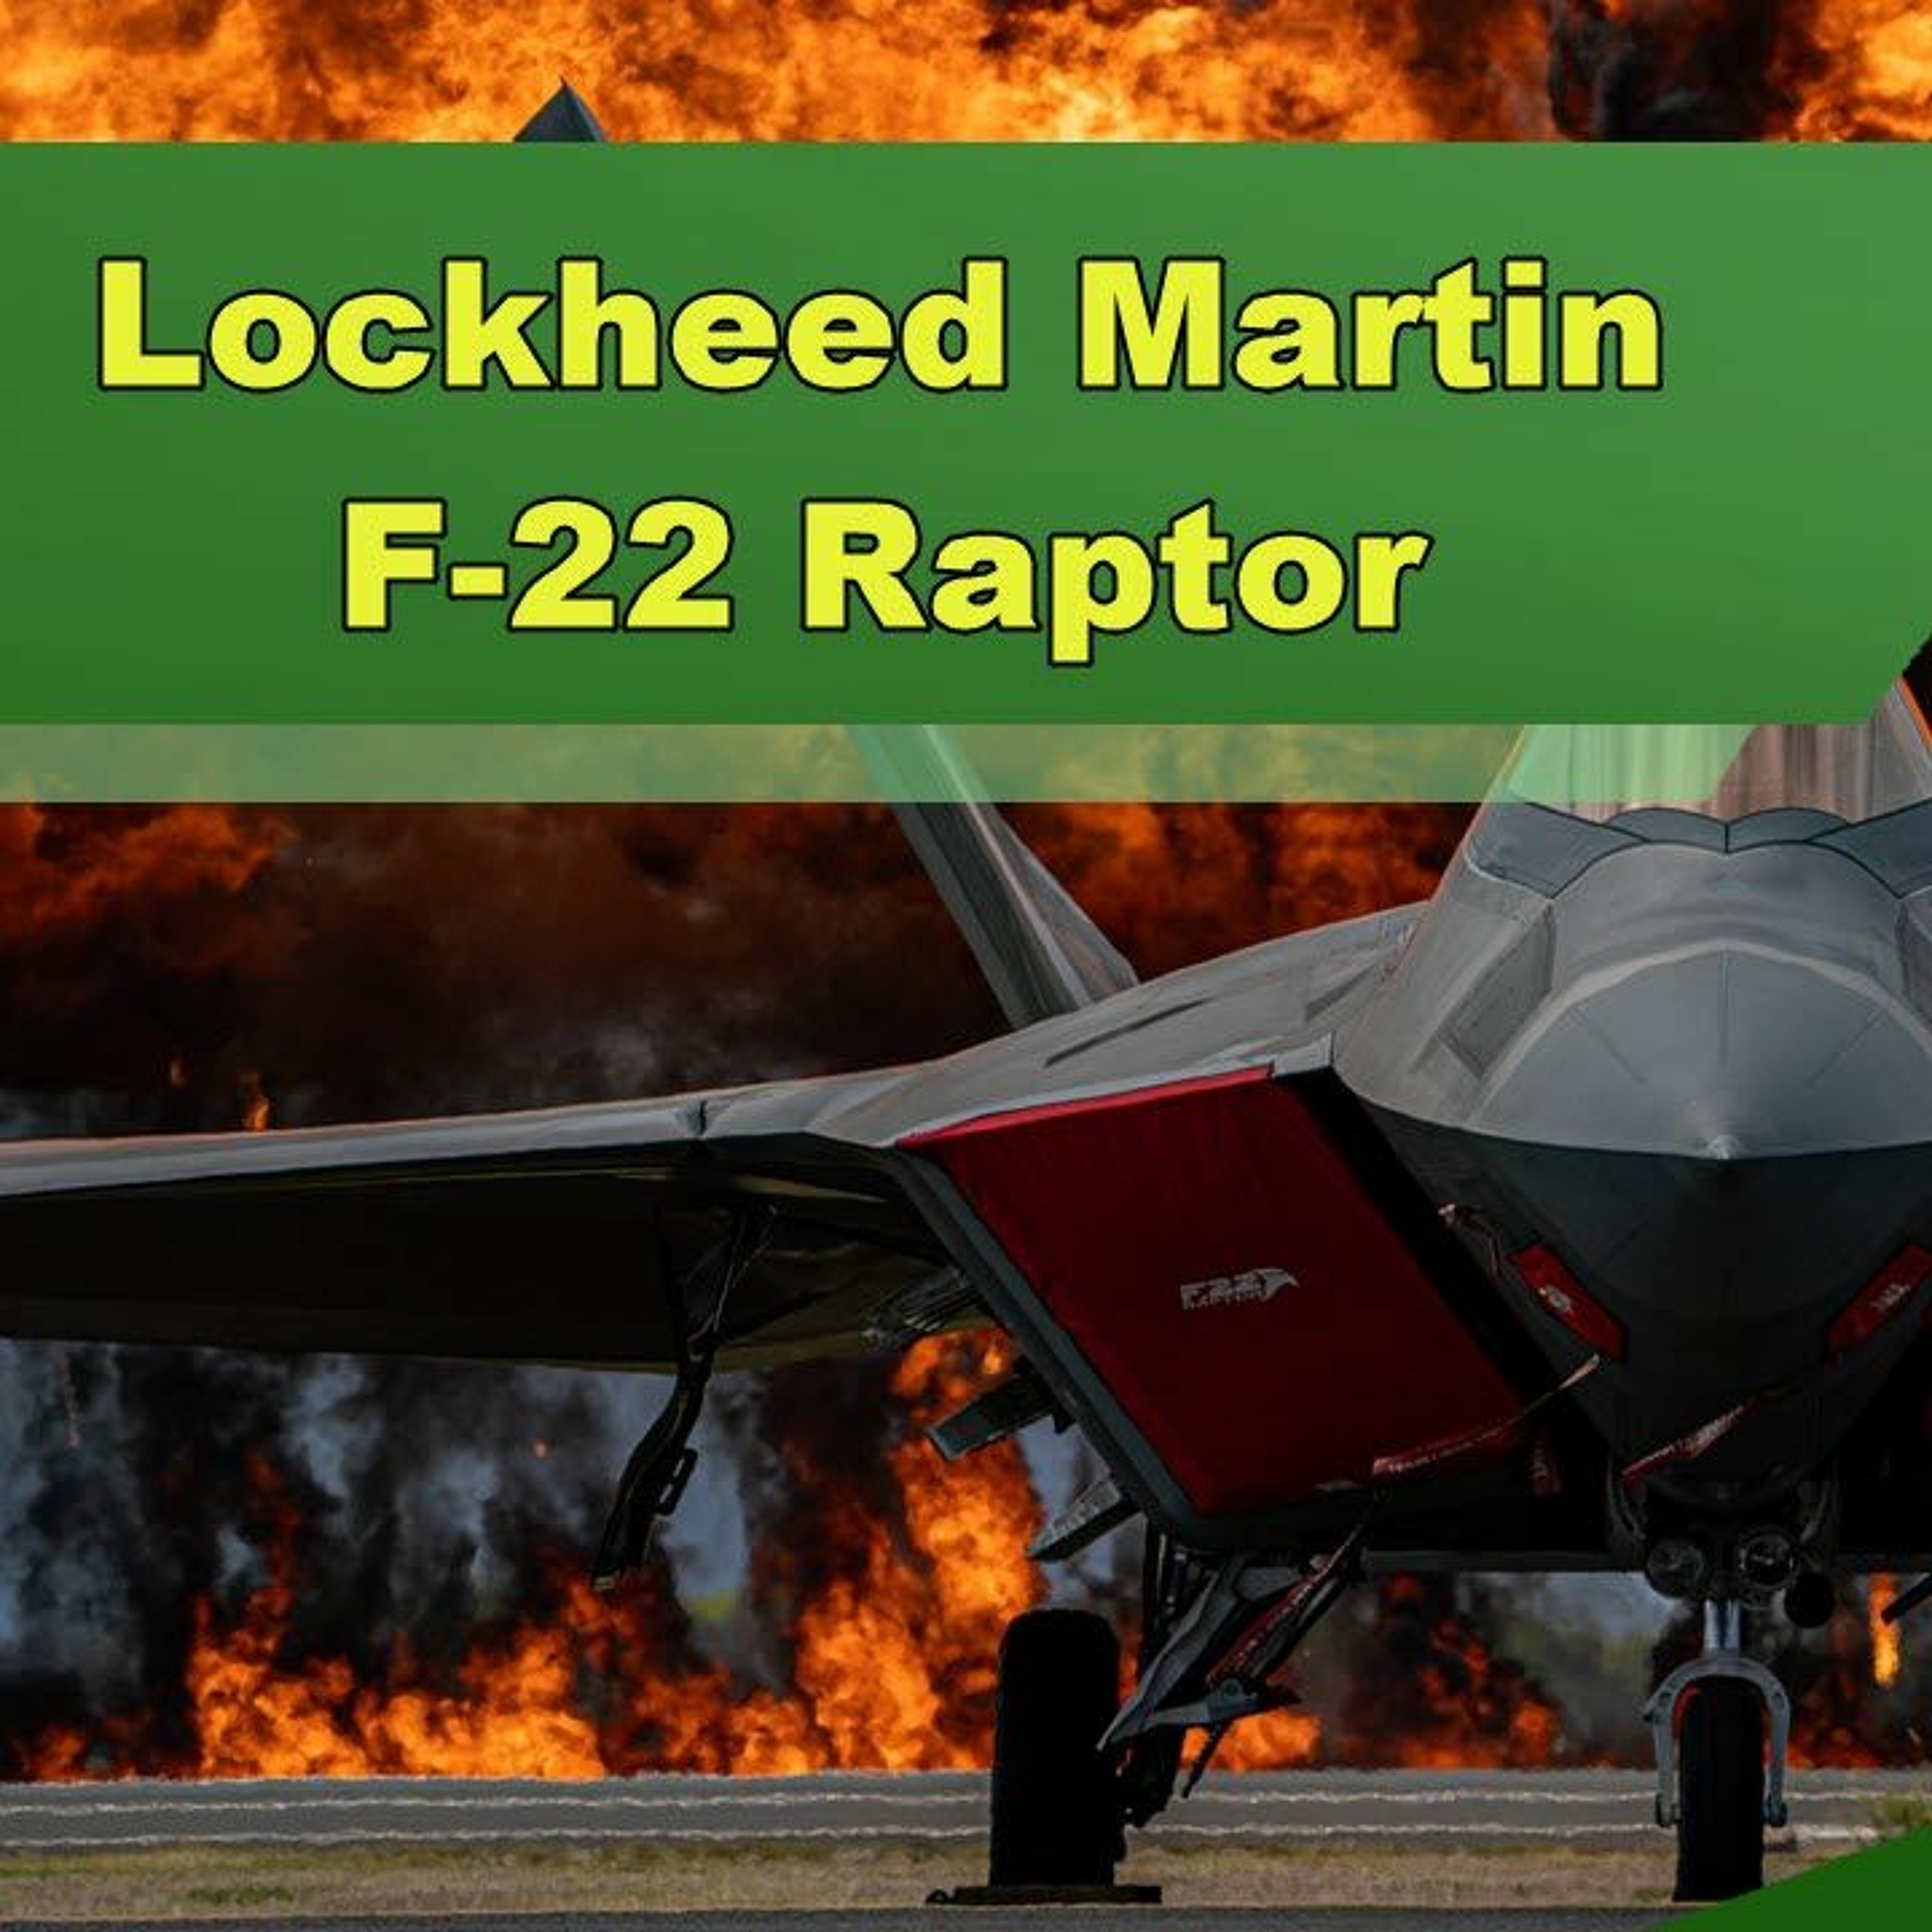 Lockheed Martin F-22 Raptor - Episode 337